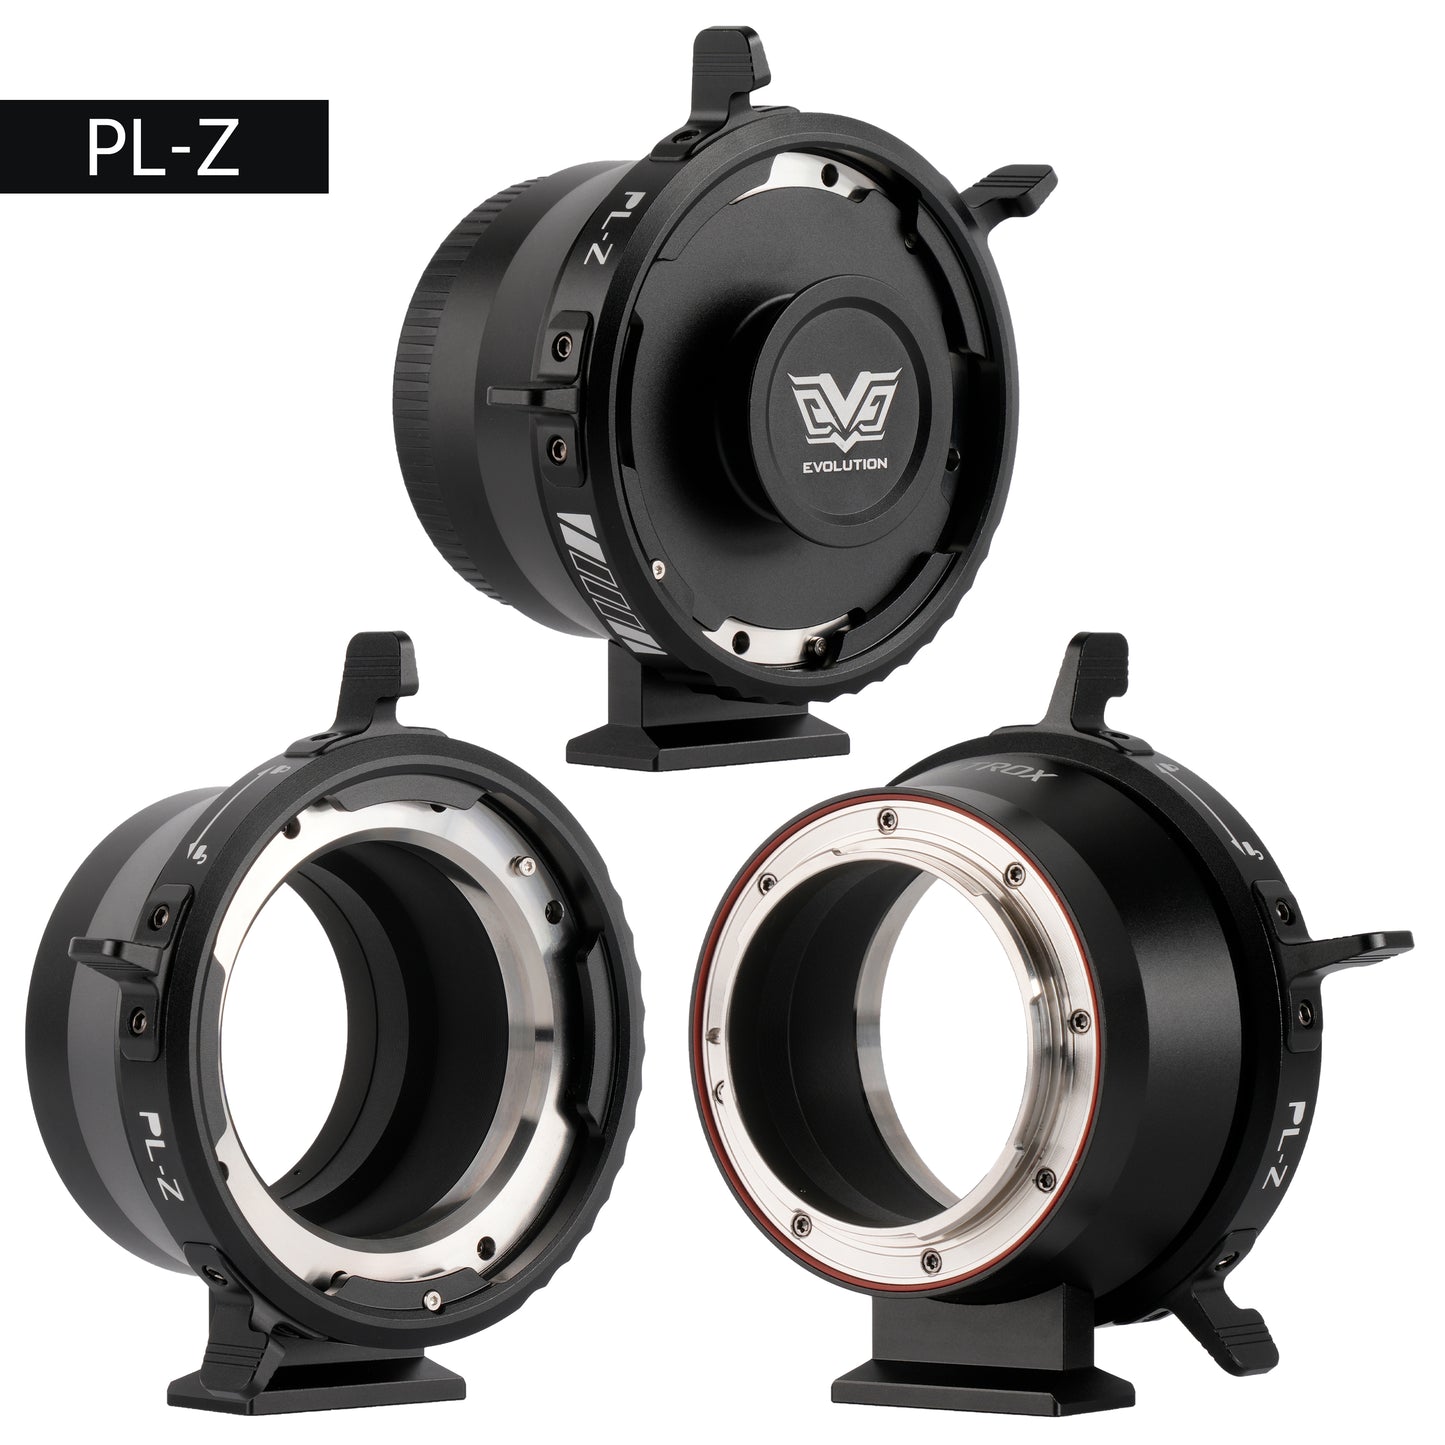 Viltrox ZMOVE Series PL Cine Lens Mount Adapter